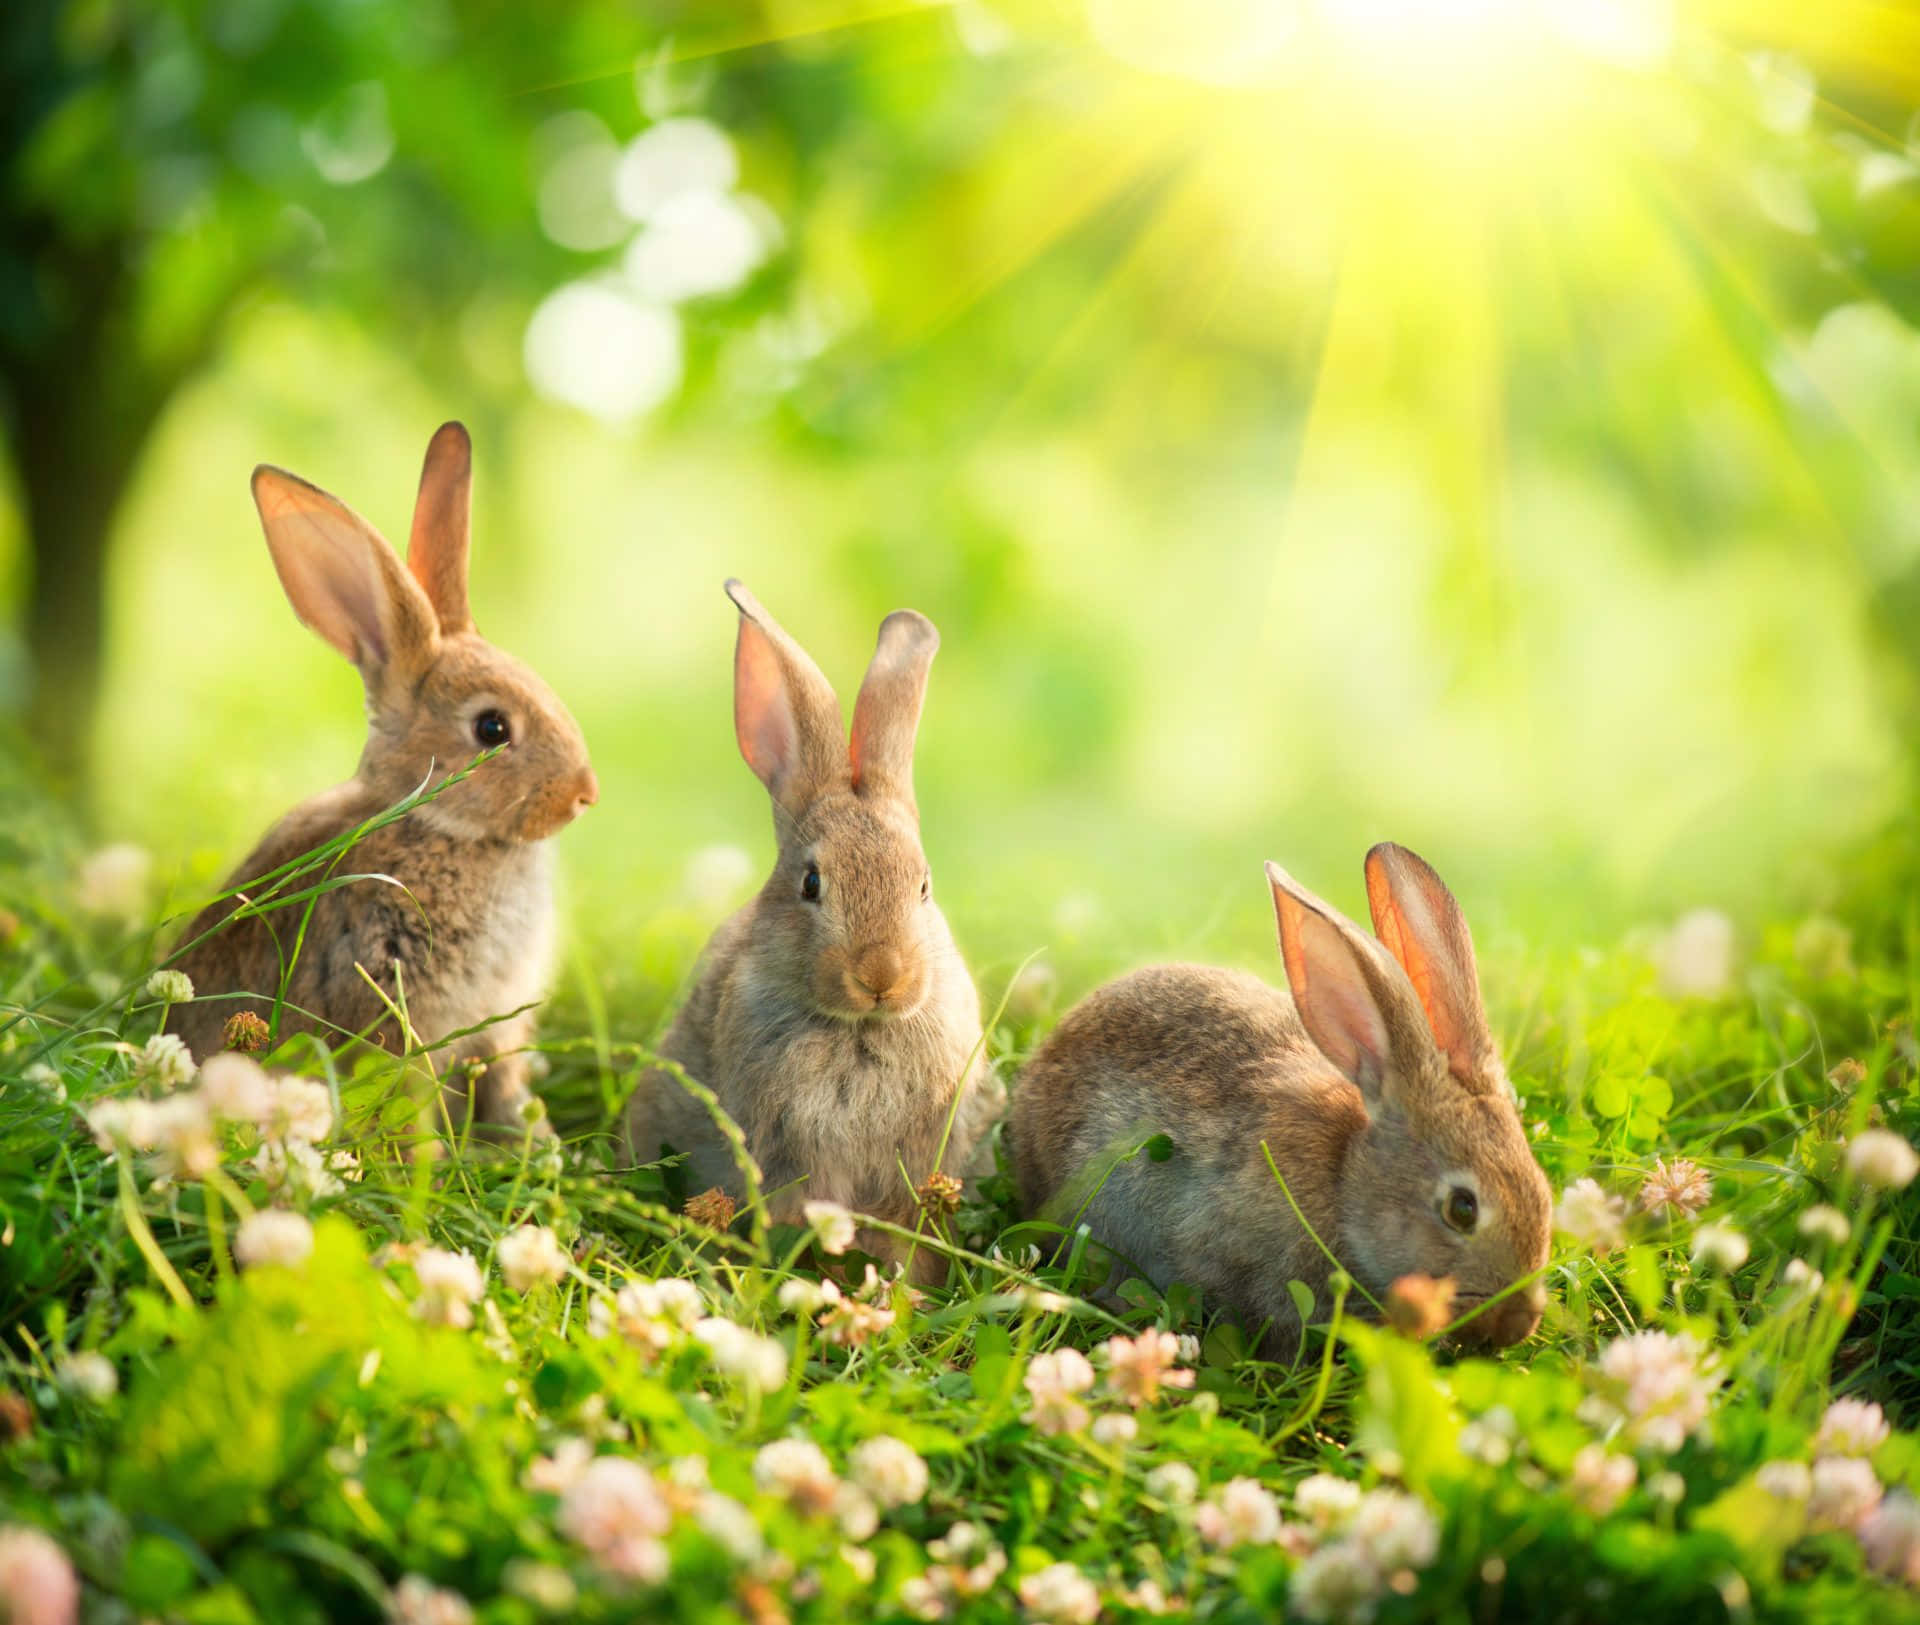 Playful Bunny Amidst a Vibrant Meadow